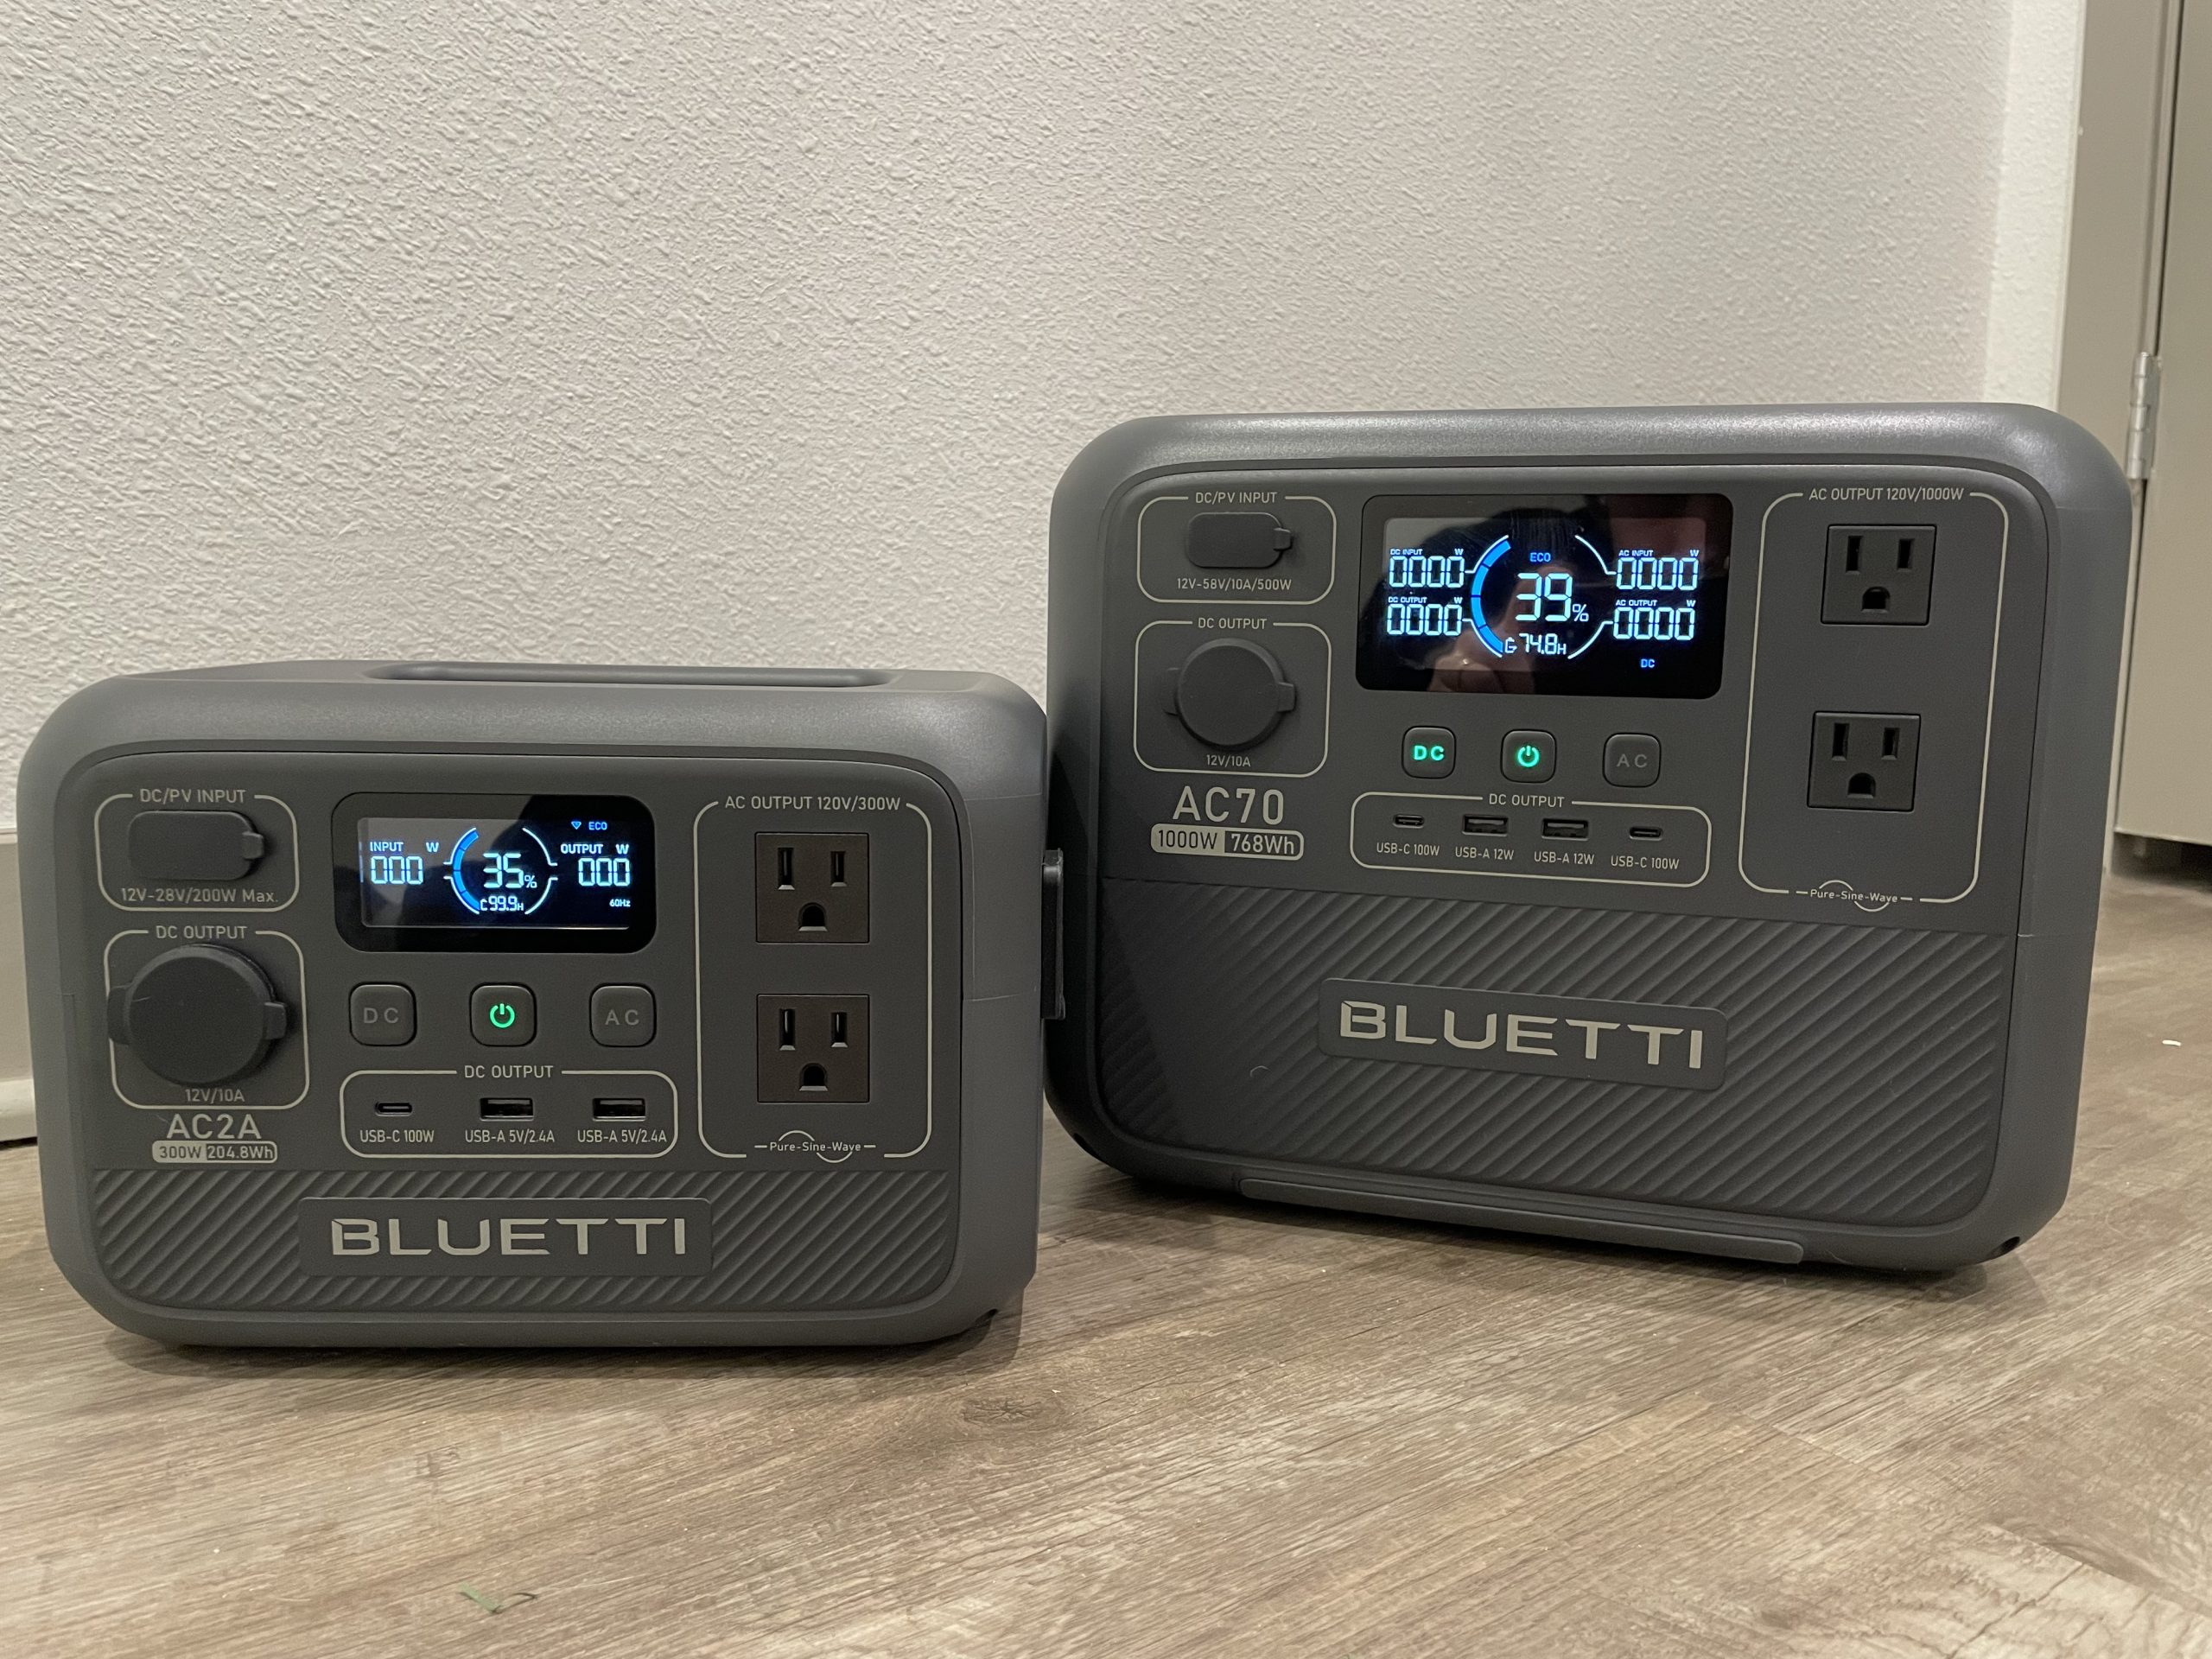 Bluetti AC2A and Bluettia AC70 side by side